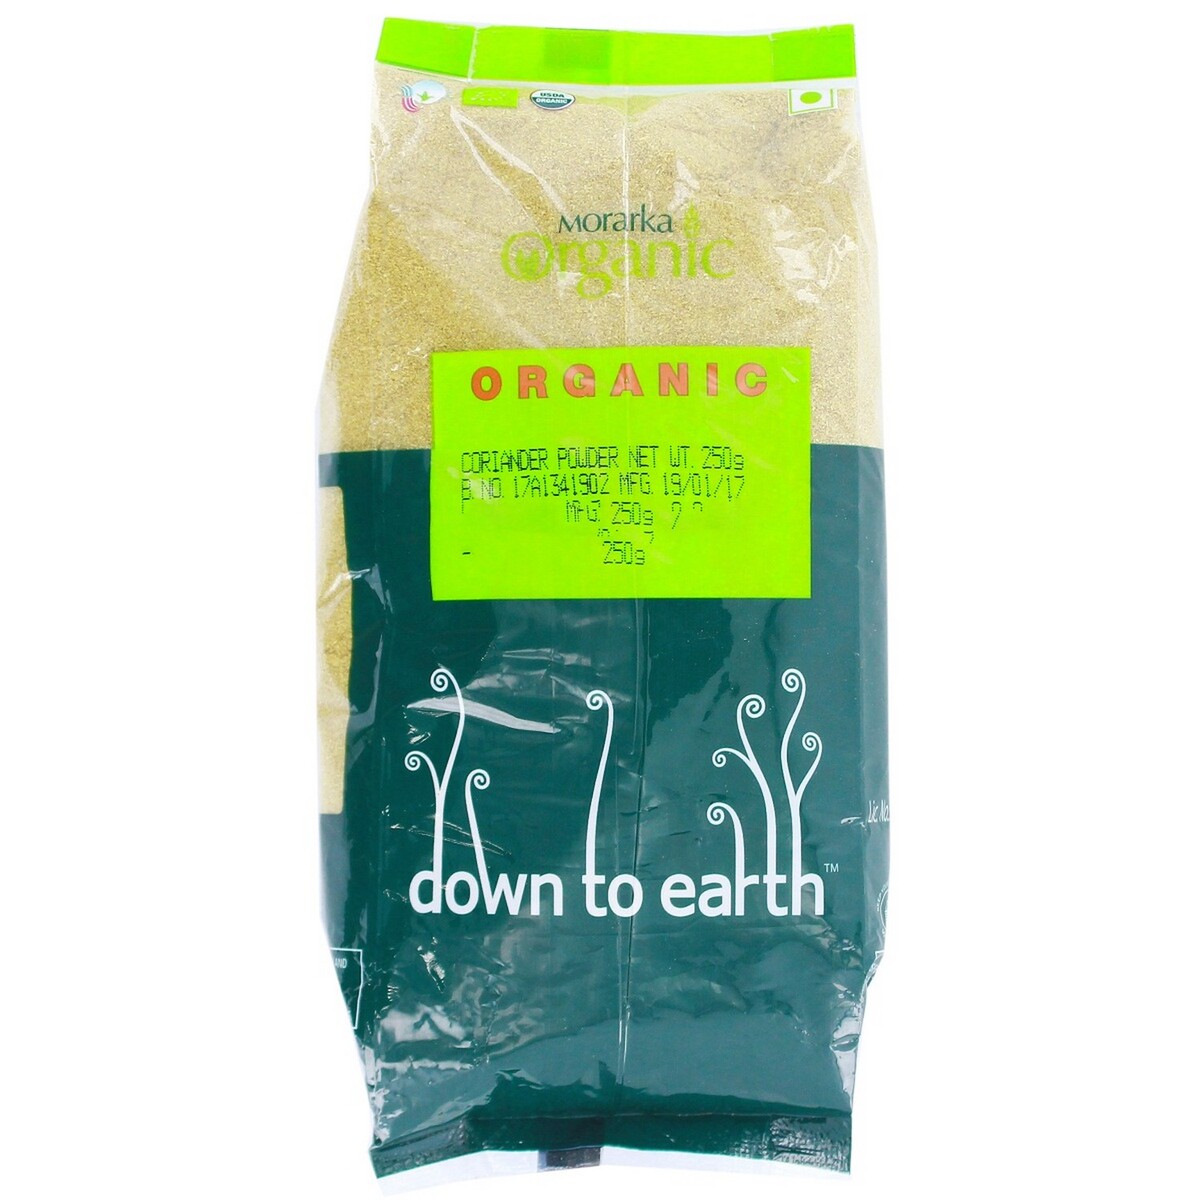 Down to Earth Organic Coriander Powder 250g